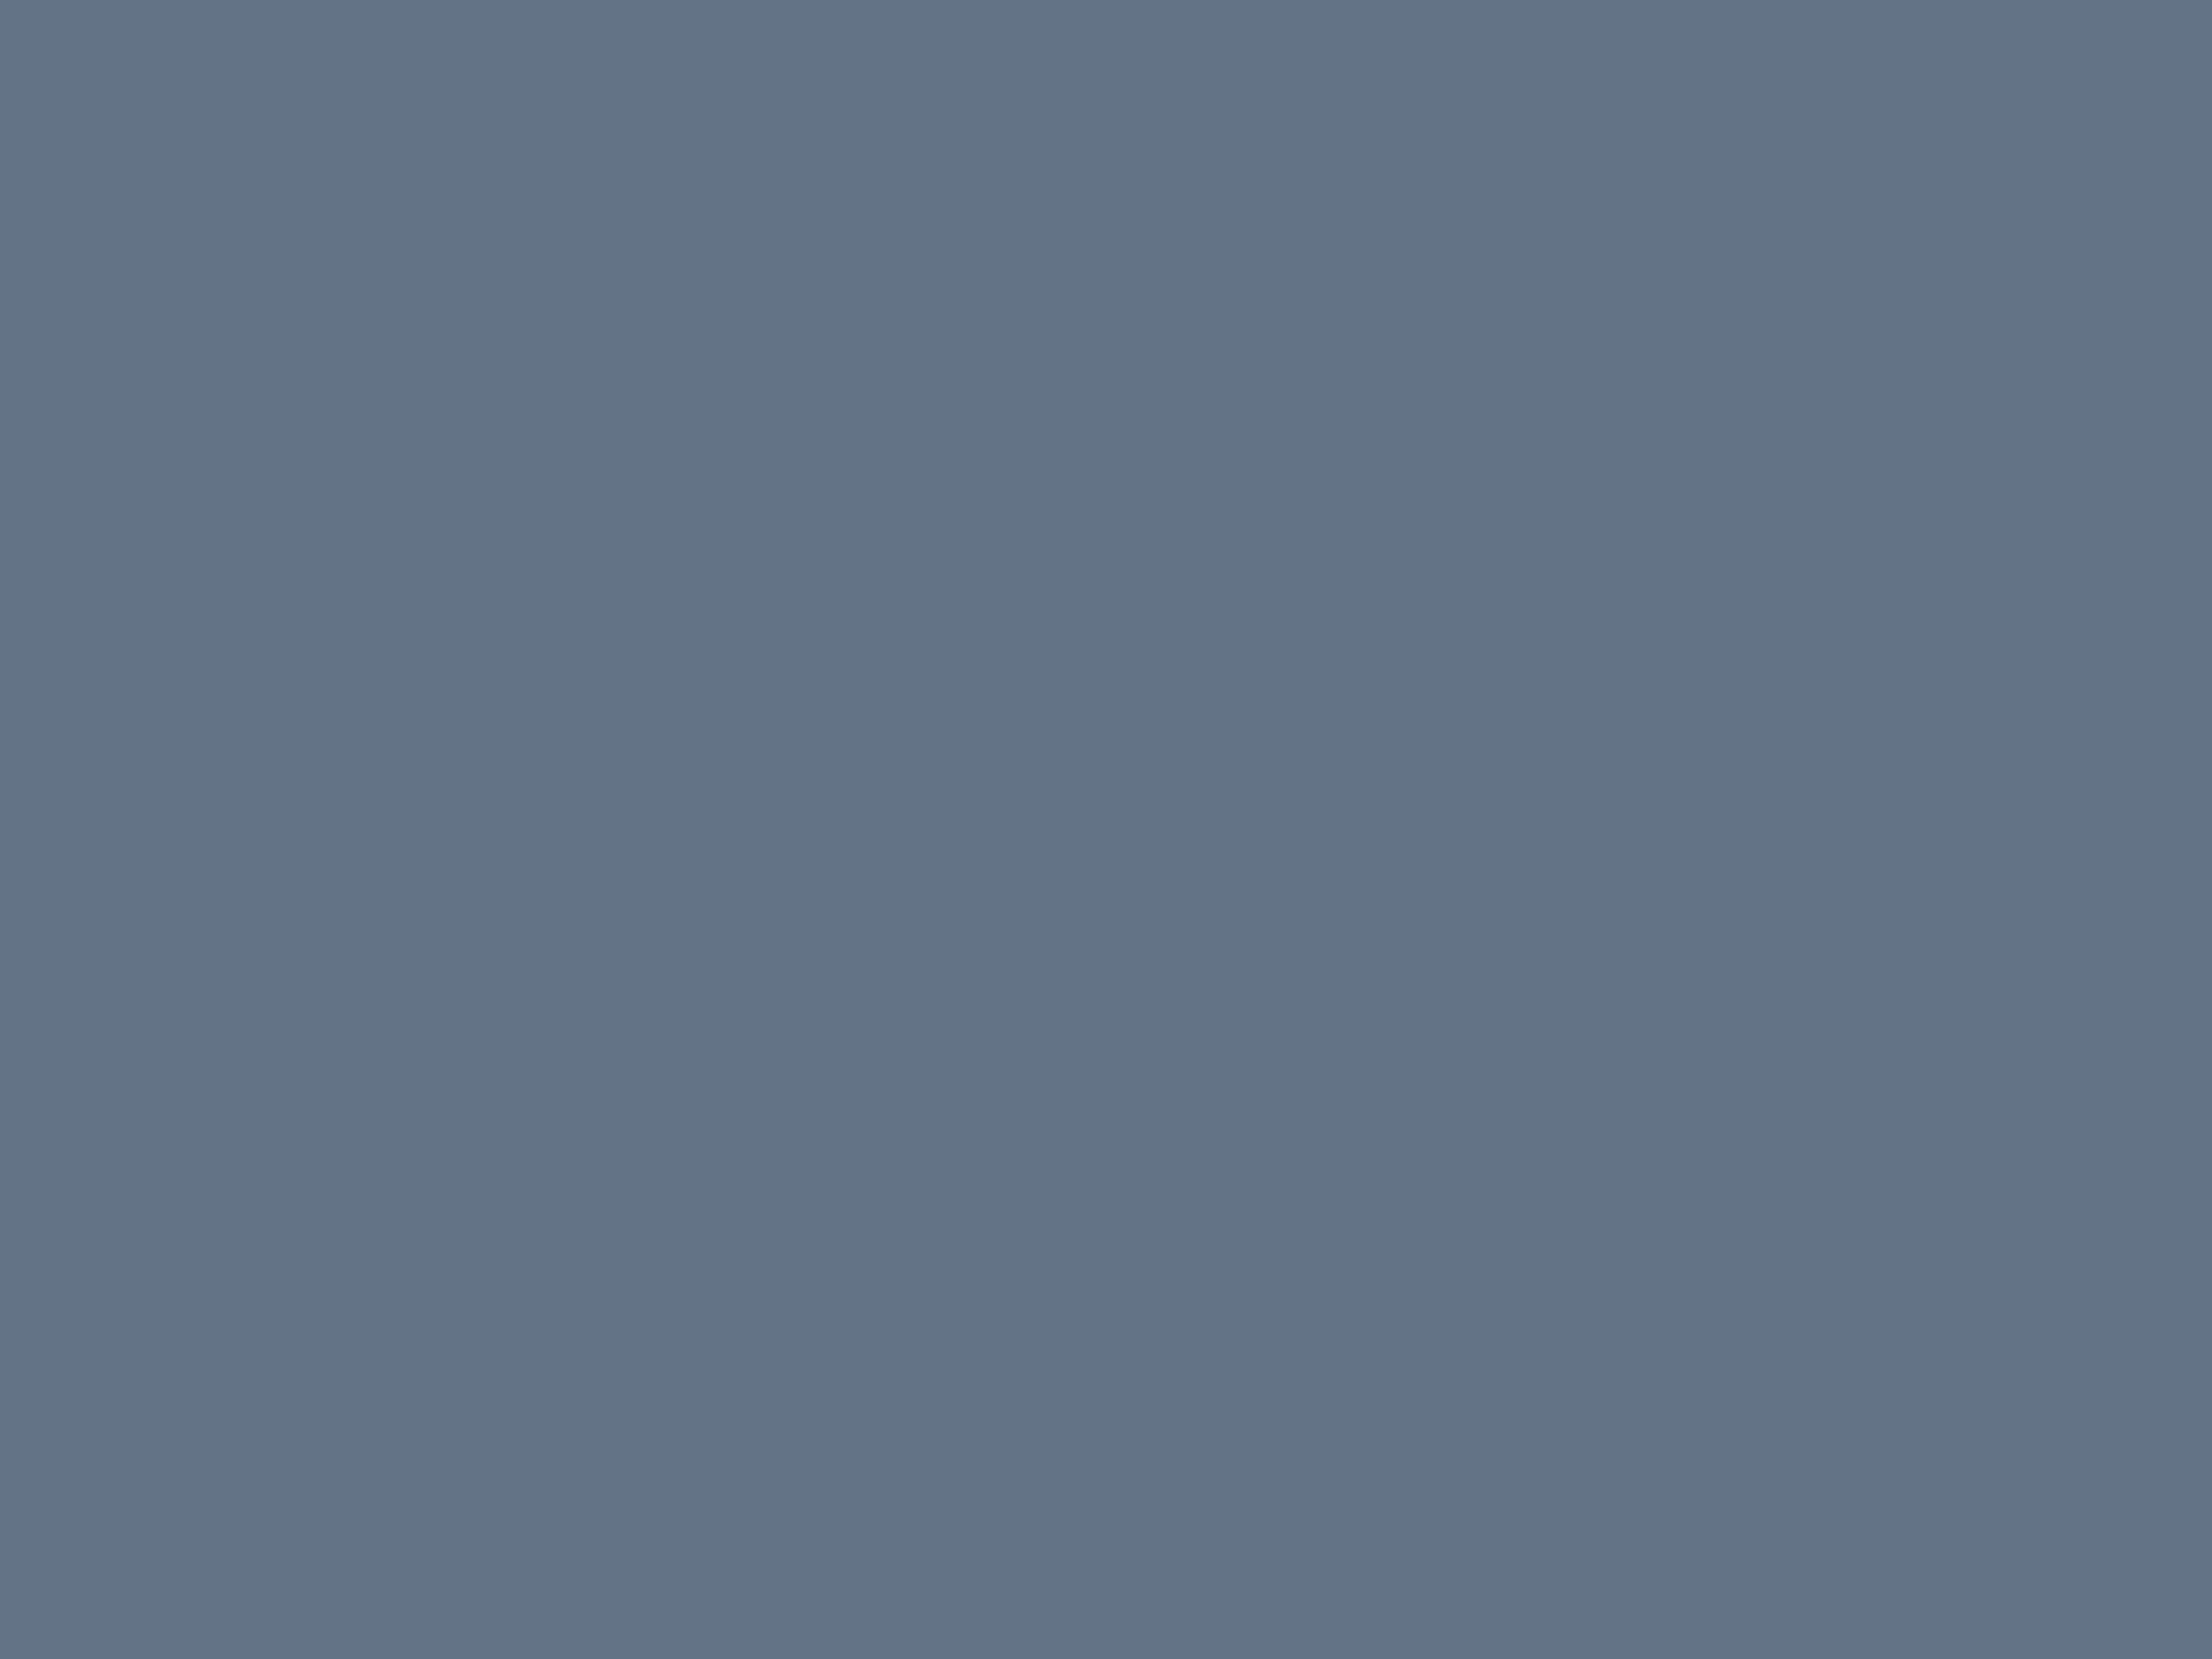 Государственный Большой театр имени Алишера Навои. Ташкент, Узбекистан. Фотография: Bobyrr / wikimedia.org